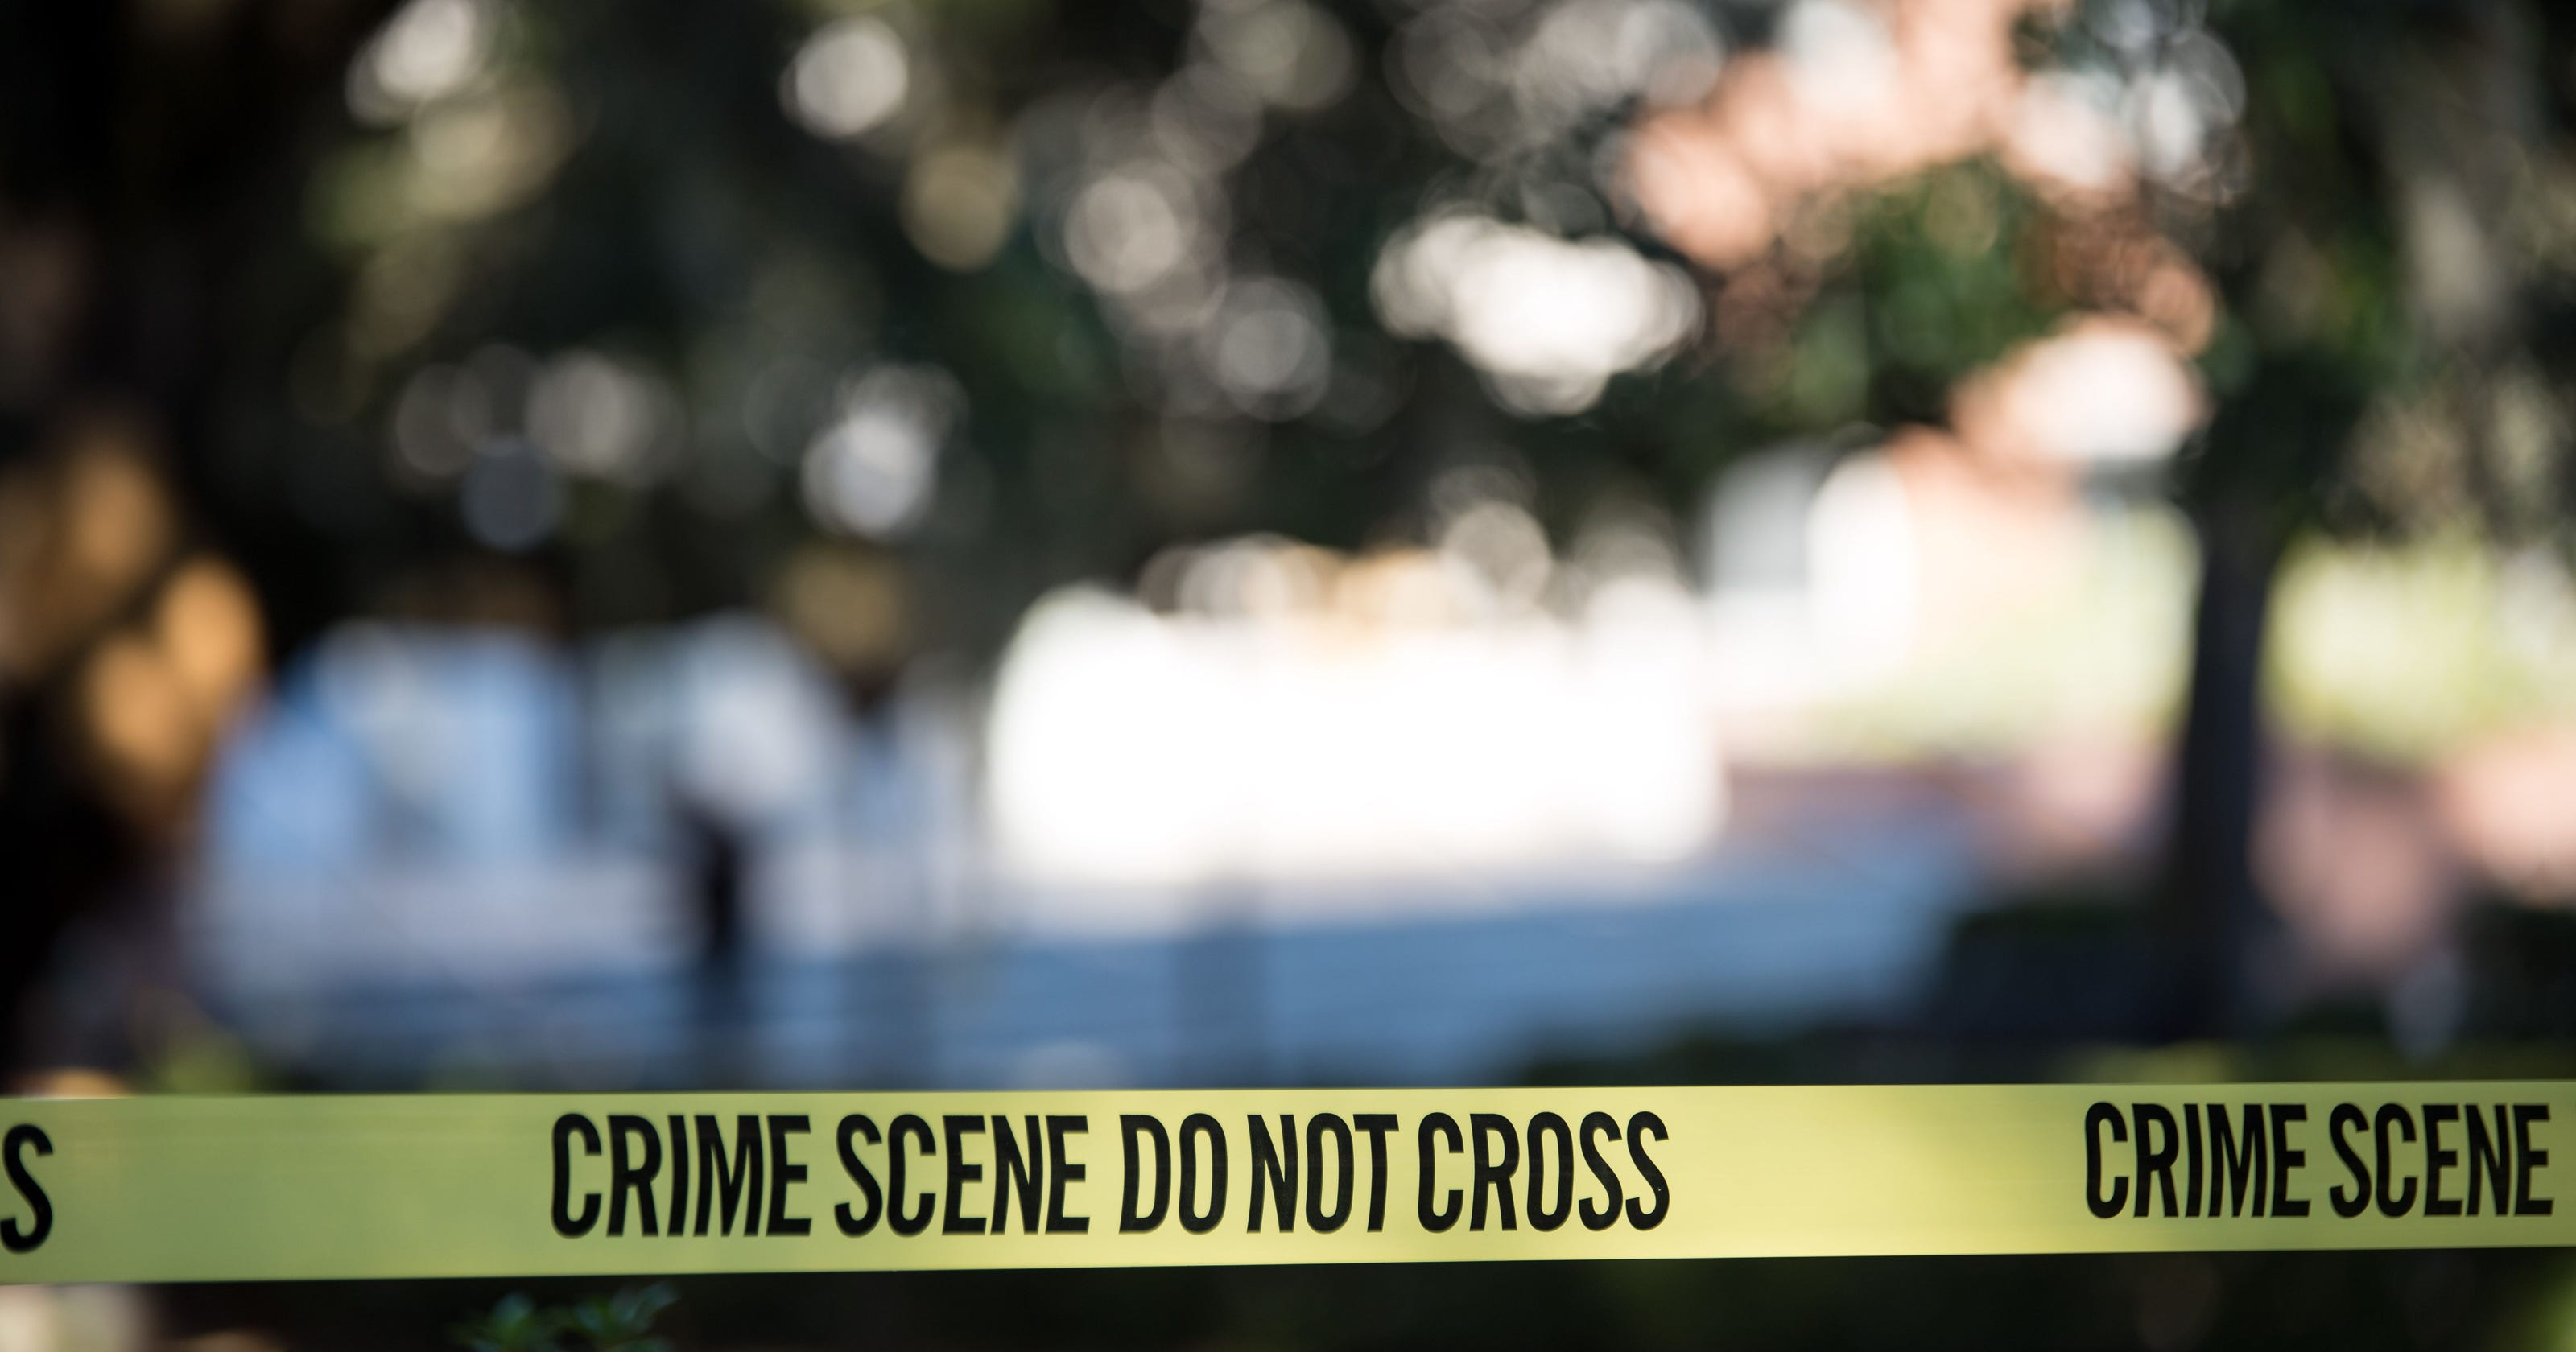 Man shot to death in Ensley neighborhood